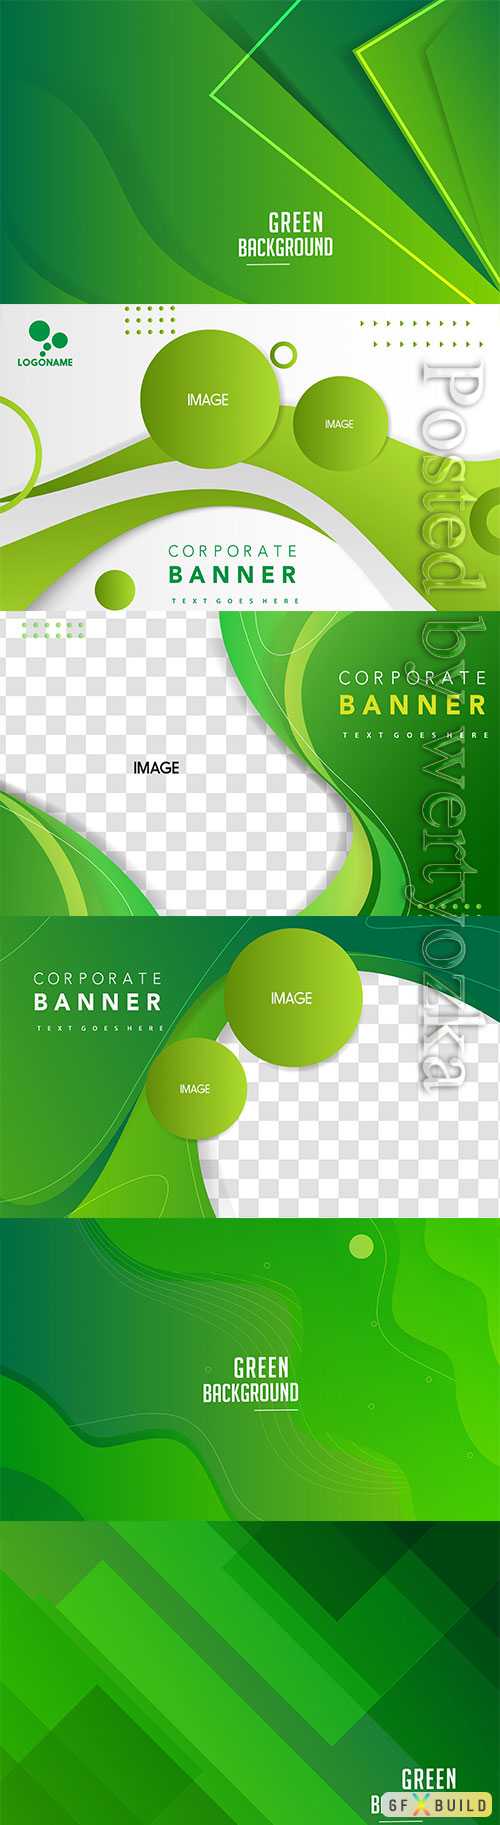 Vector corporate green banner template